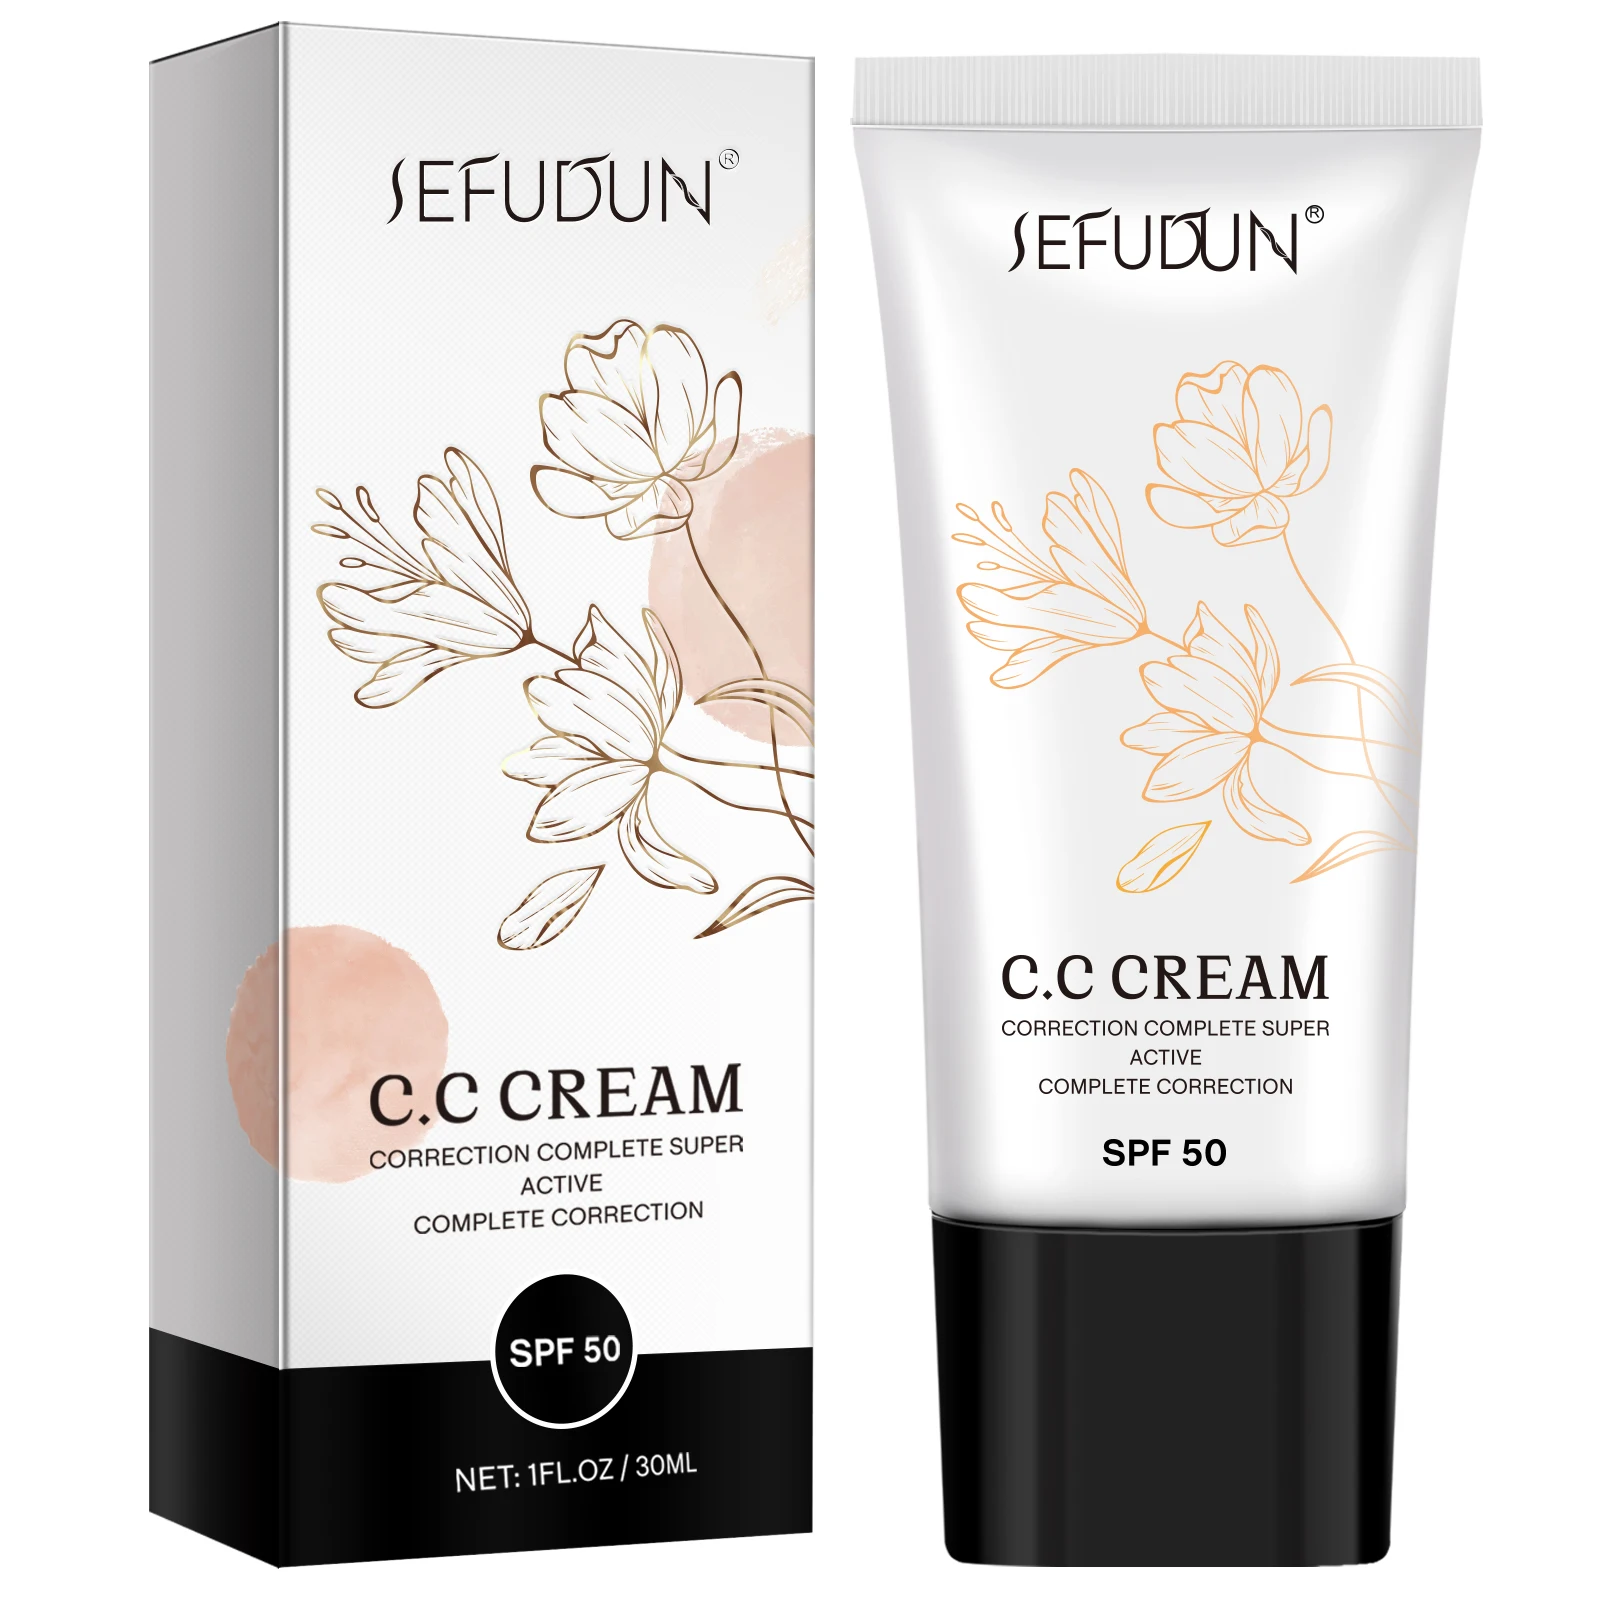 

Sefudun Natural Color CC Cream Foundation Cosmetic Air Cushion Innovative Concealer Sun Protection SPF50